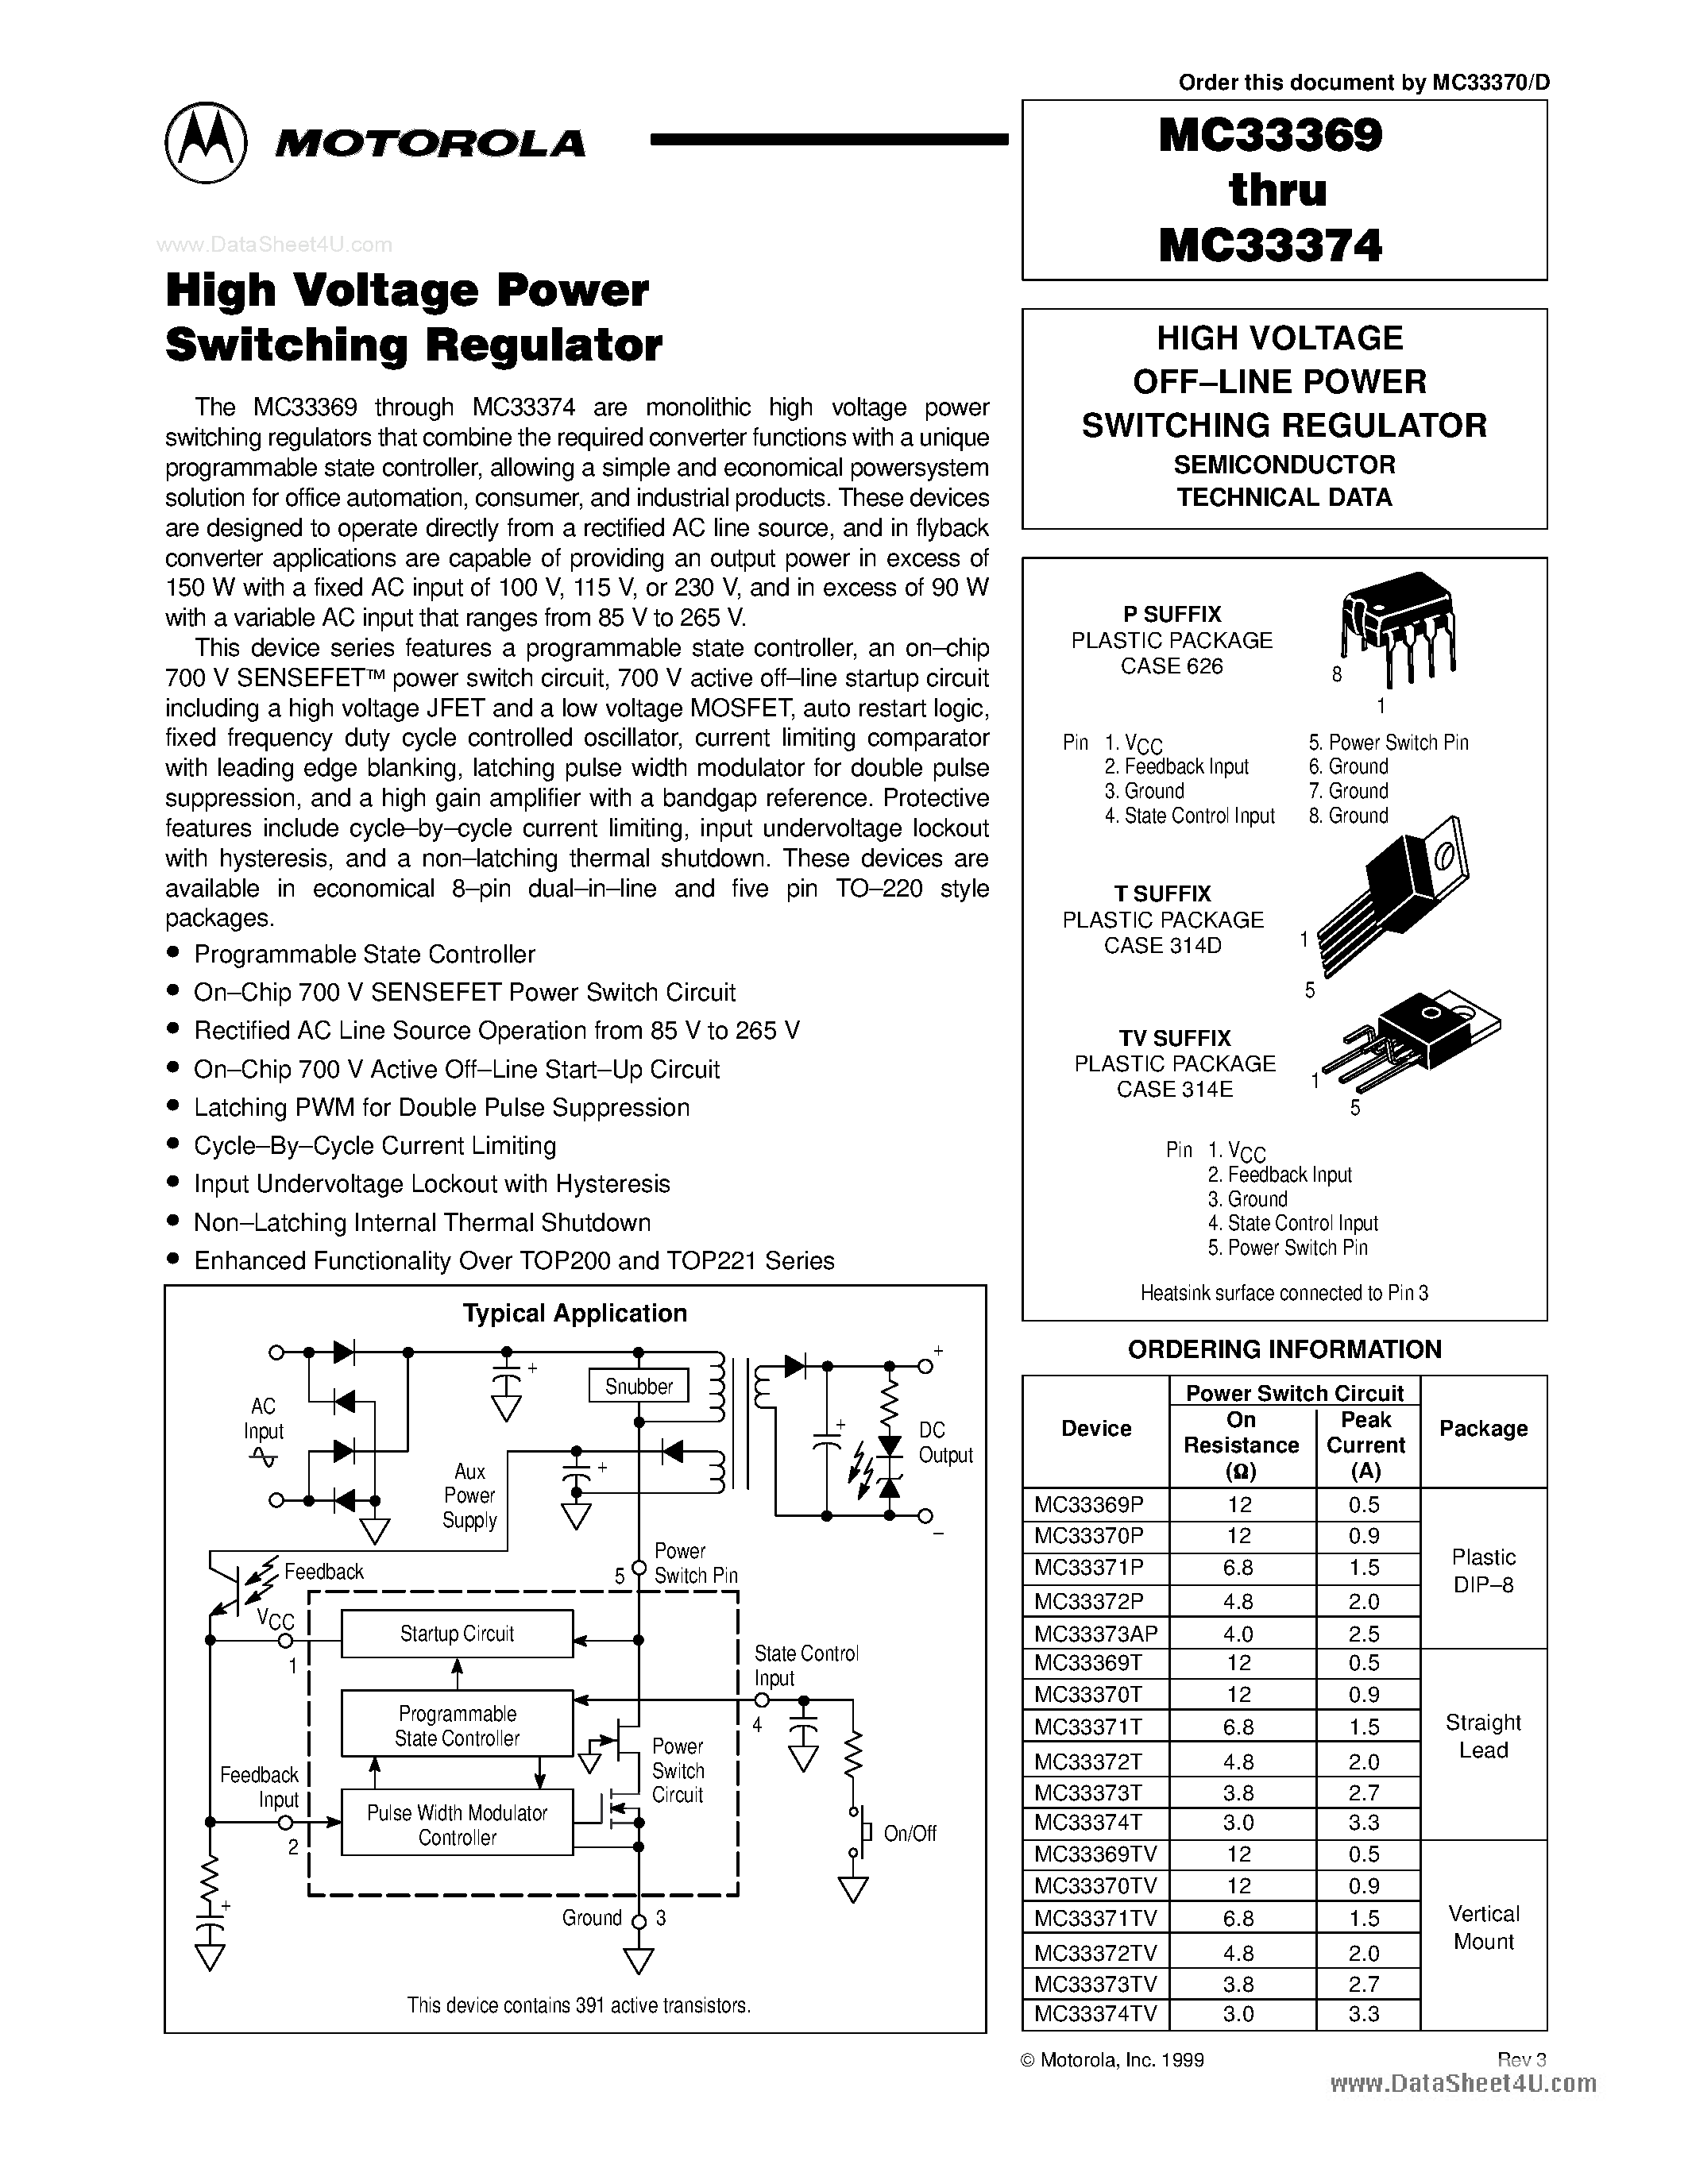 Datasheet MC33369P - (MC33369 - MC33374) High Voltage Off Line Power Switching Regulator page 1